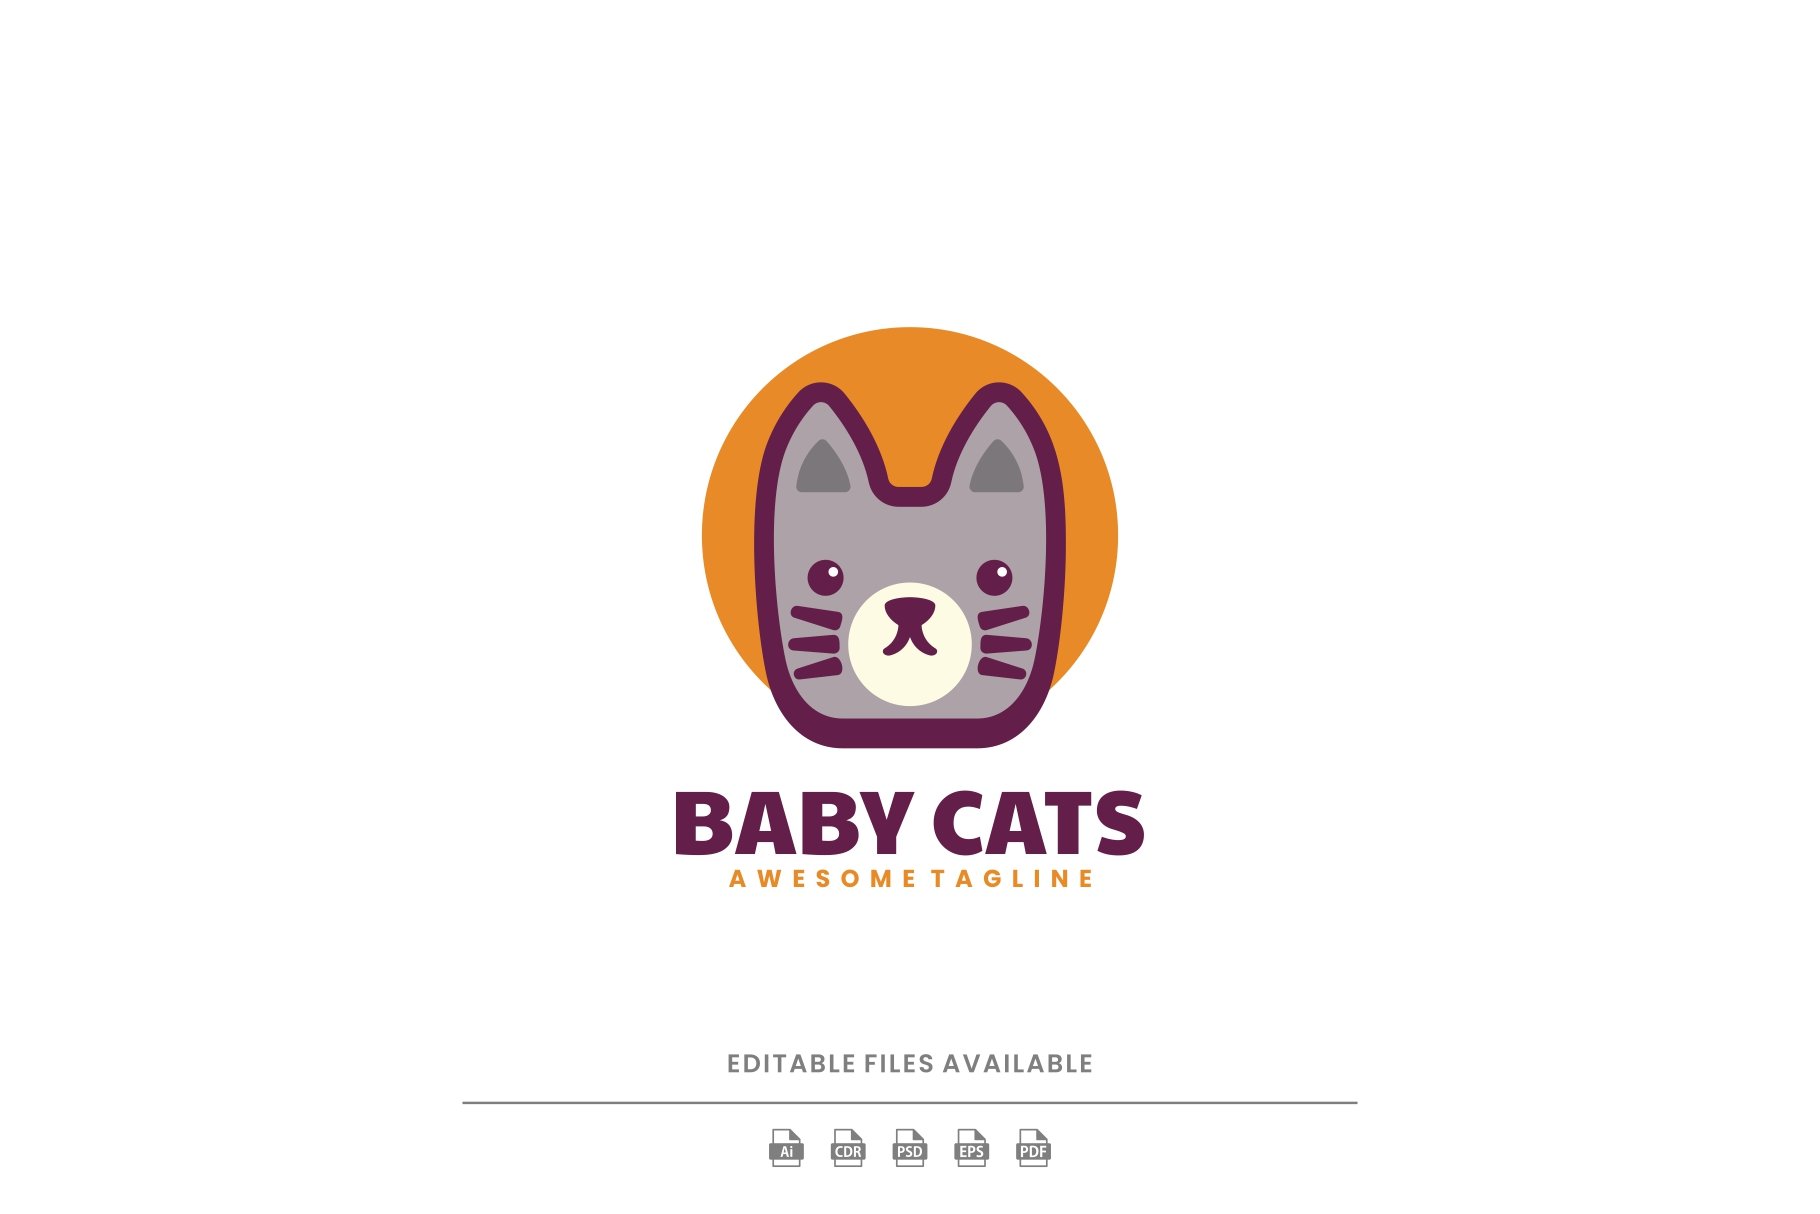 Baby cat Simple Mascot Logo cover image.